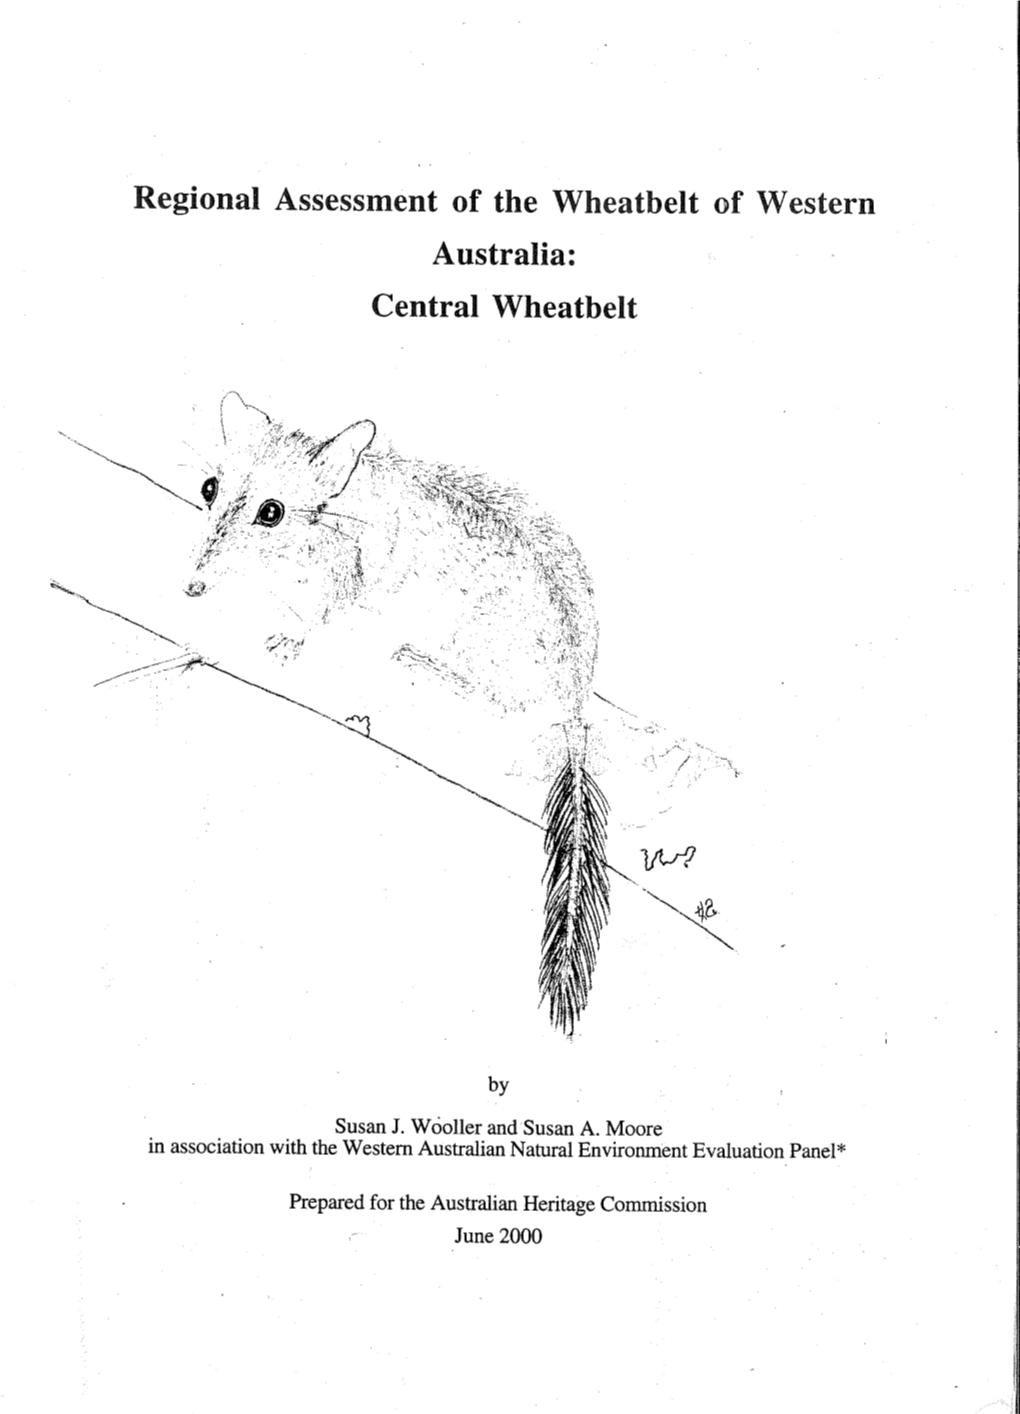 Regional Assessment of the Wheatbelt of Western Australia: Central Wheatbelt